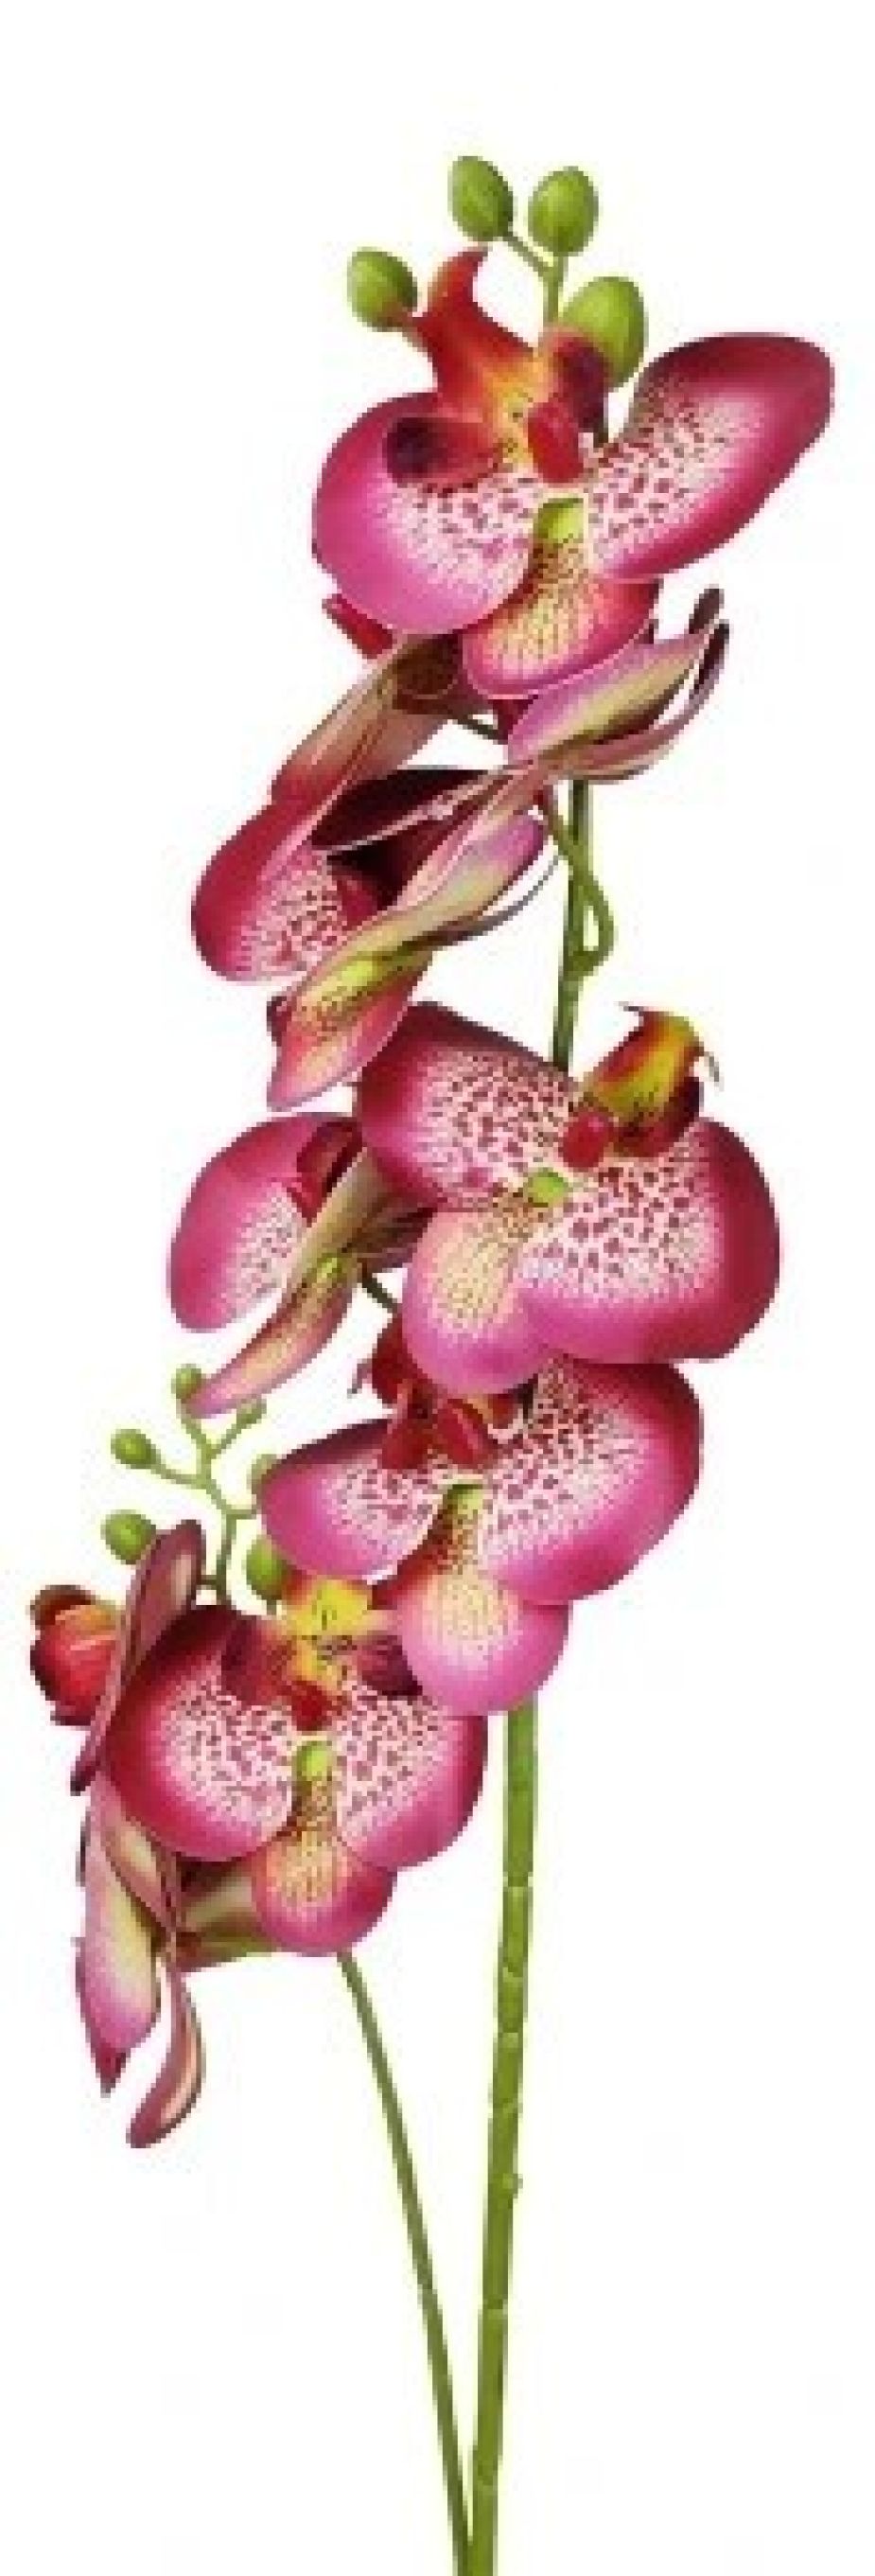 Storczyk/Orchidea amarantowy nakrapiany 85cm